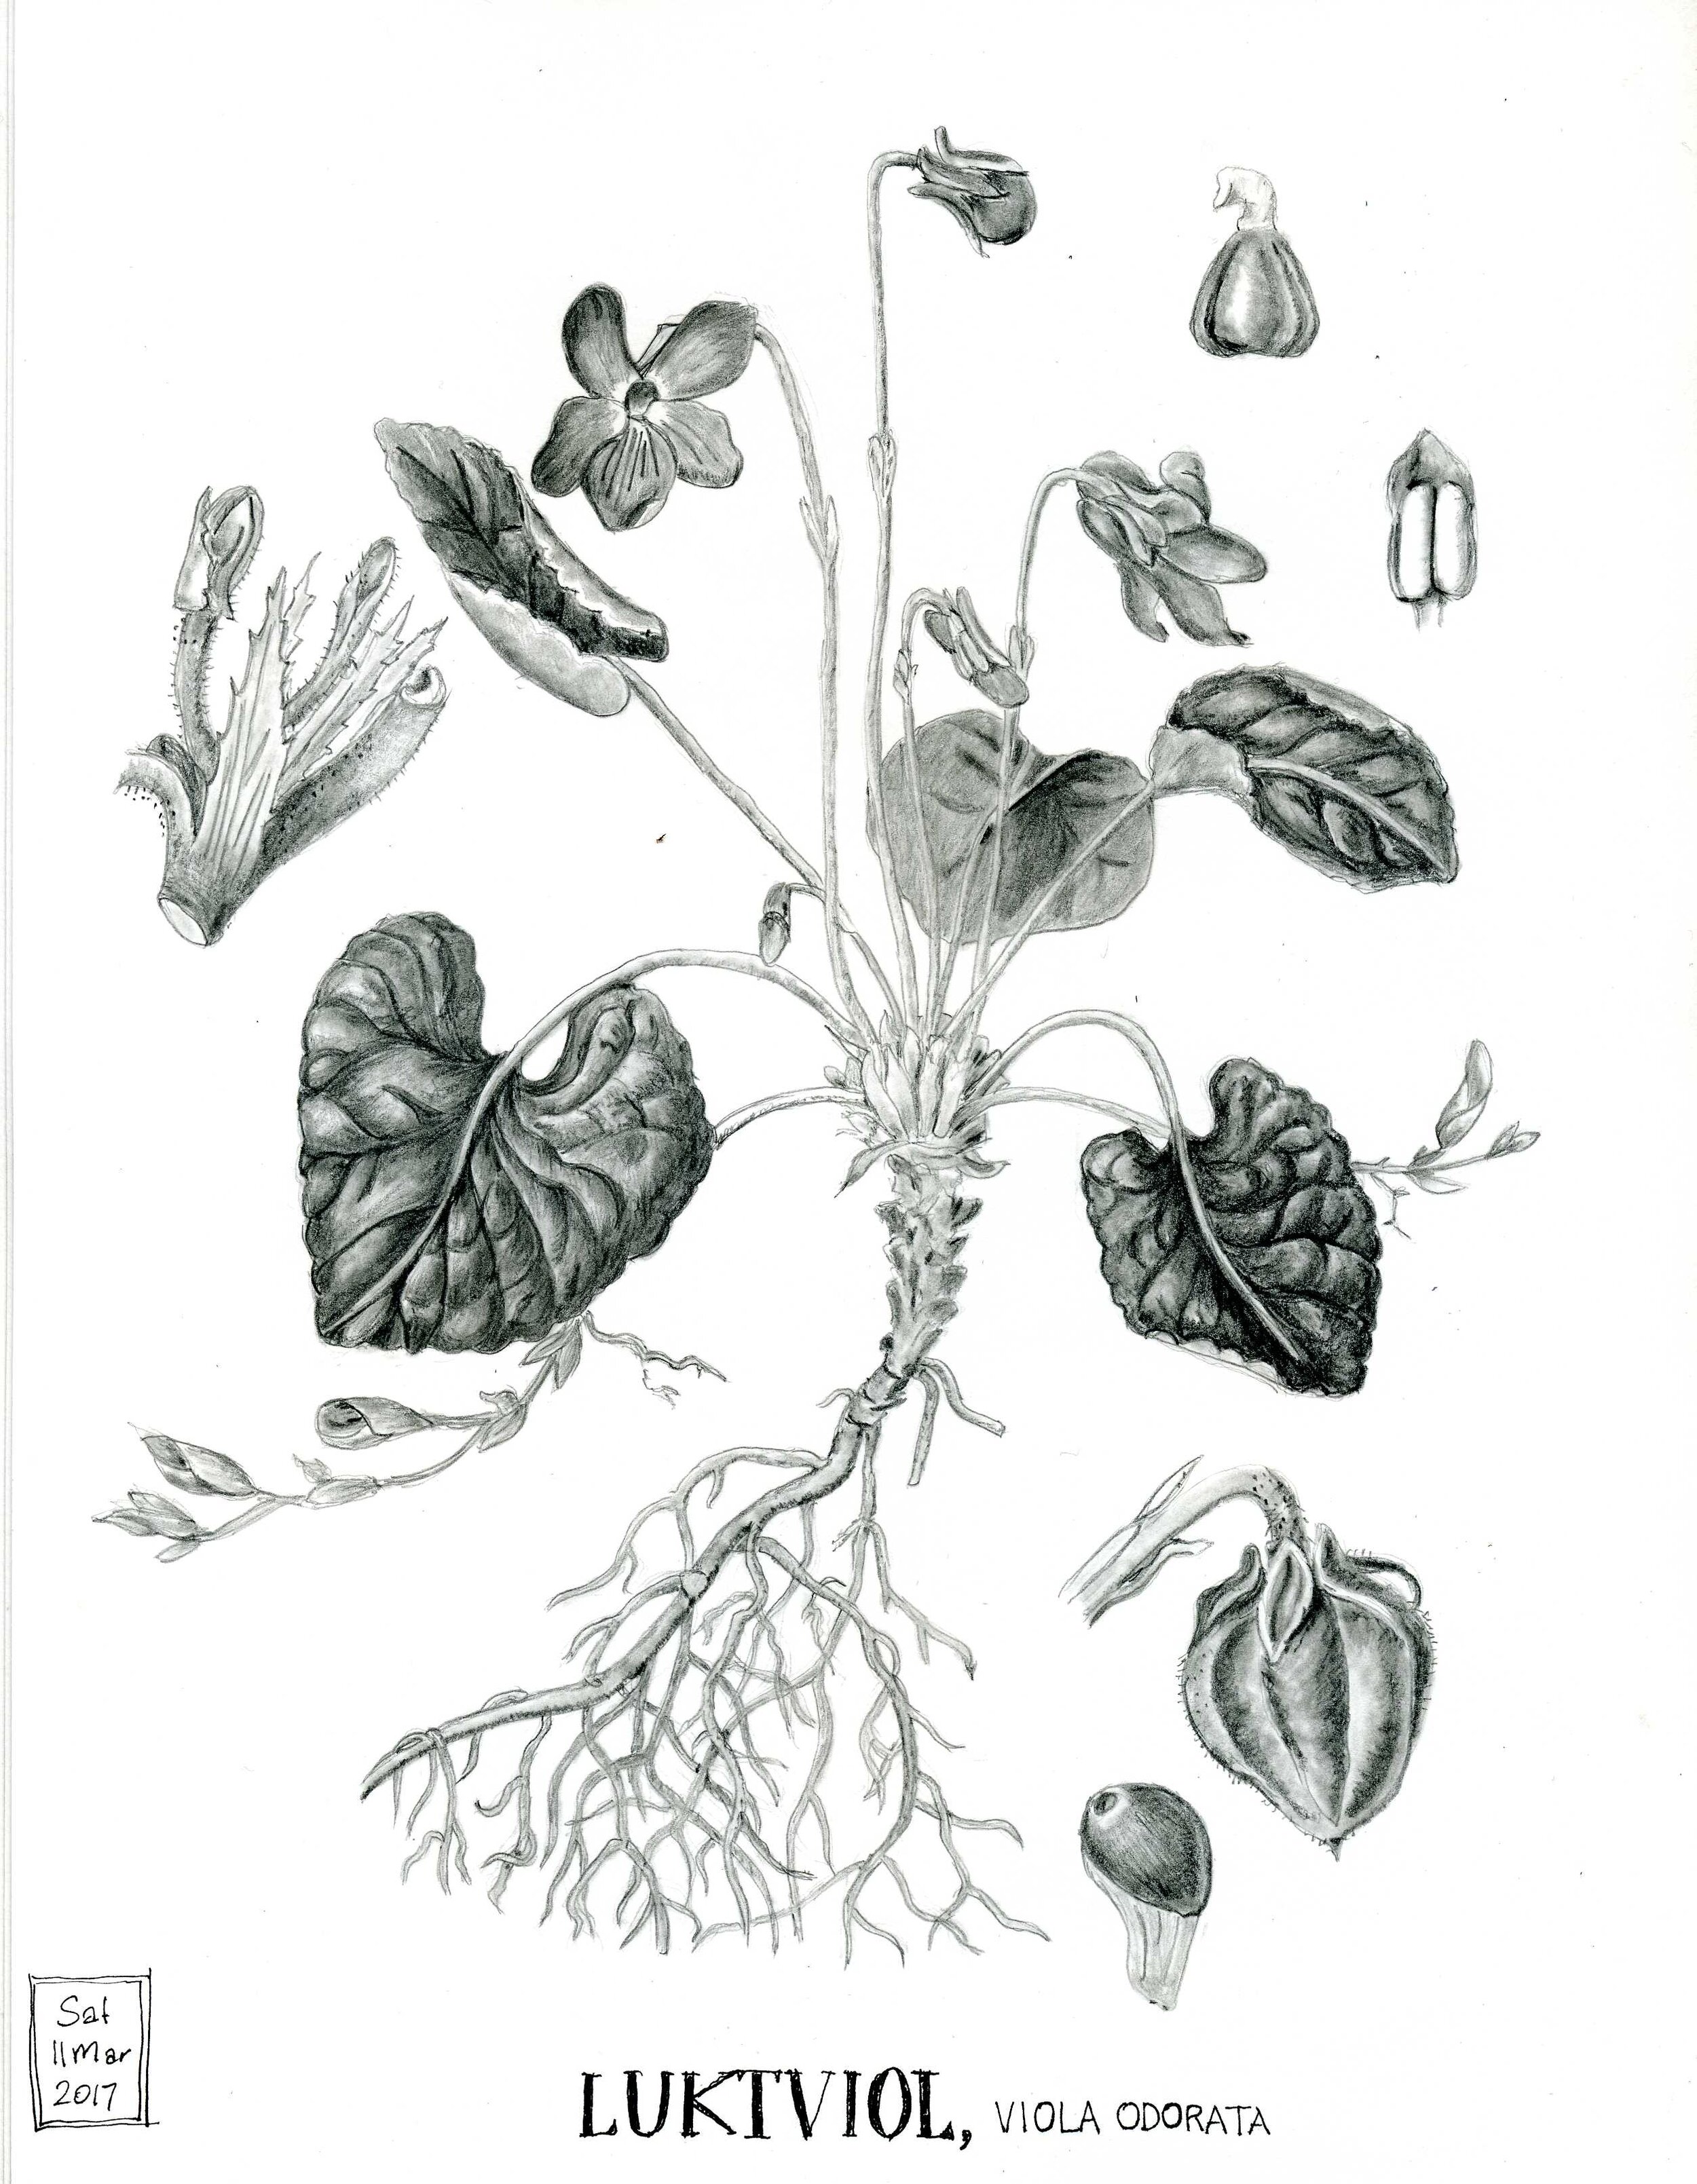 All graphite version of a viola botanical